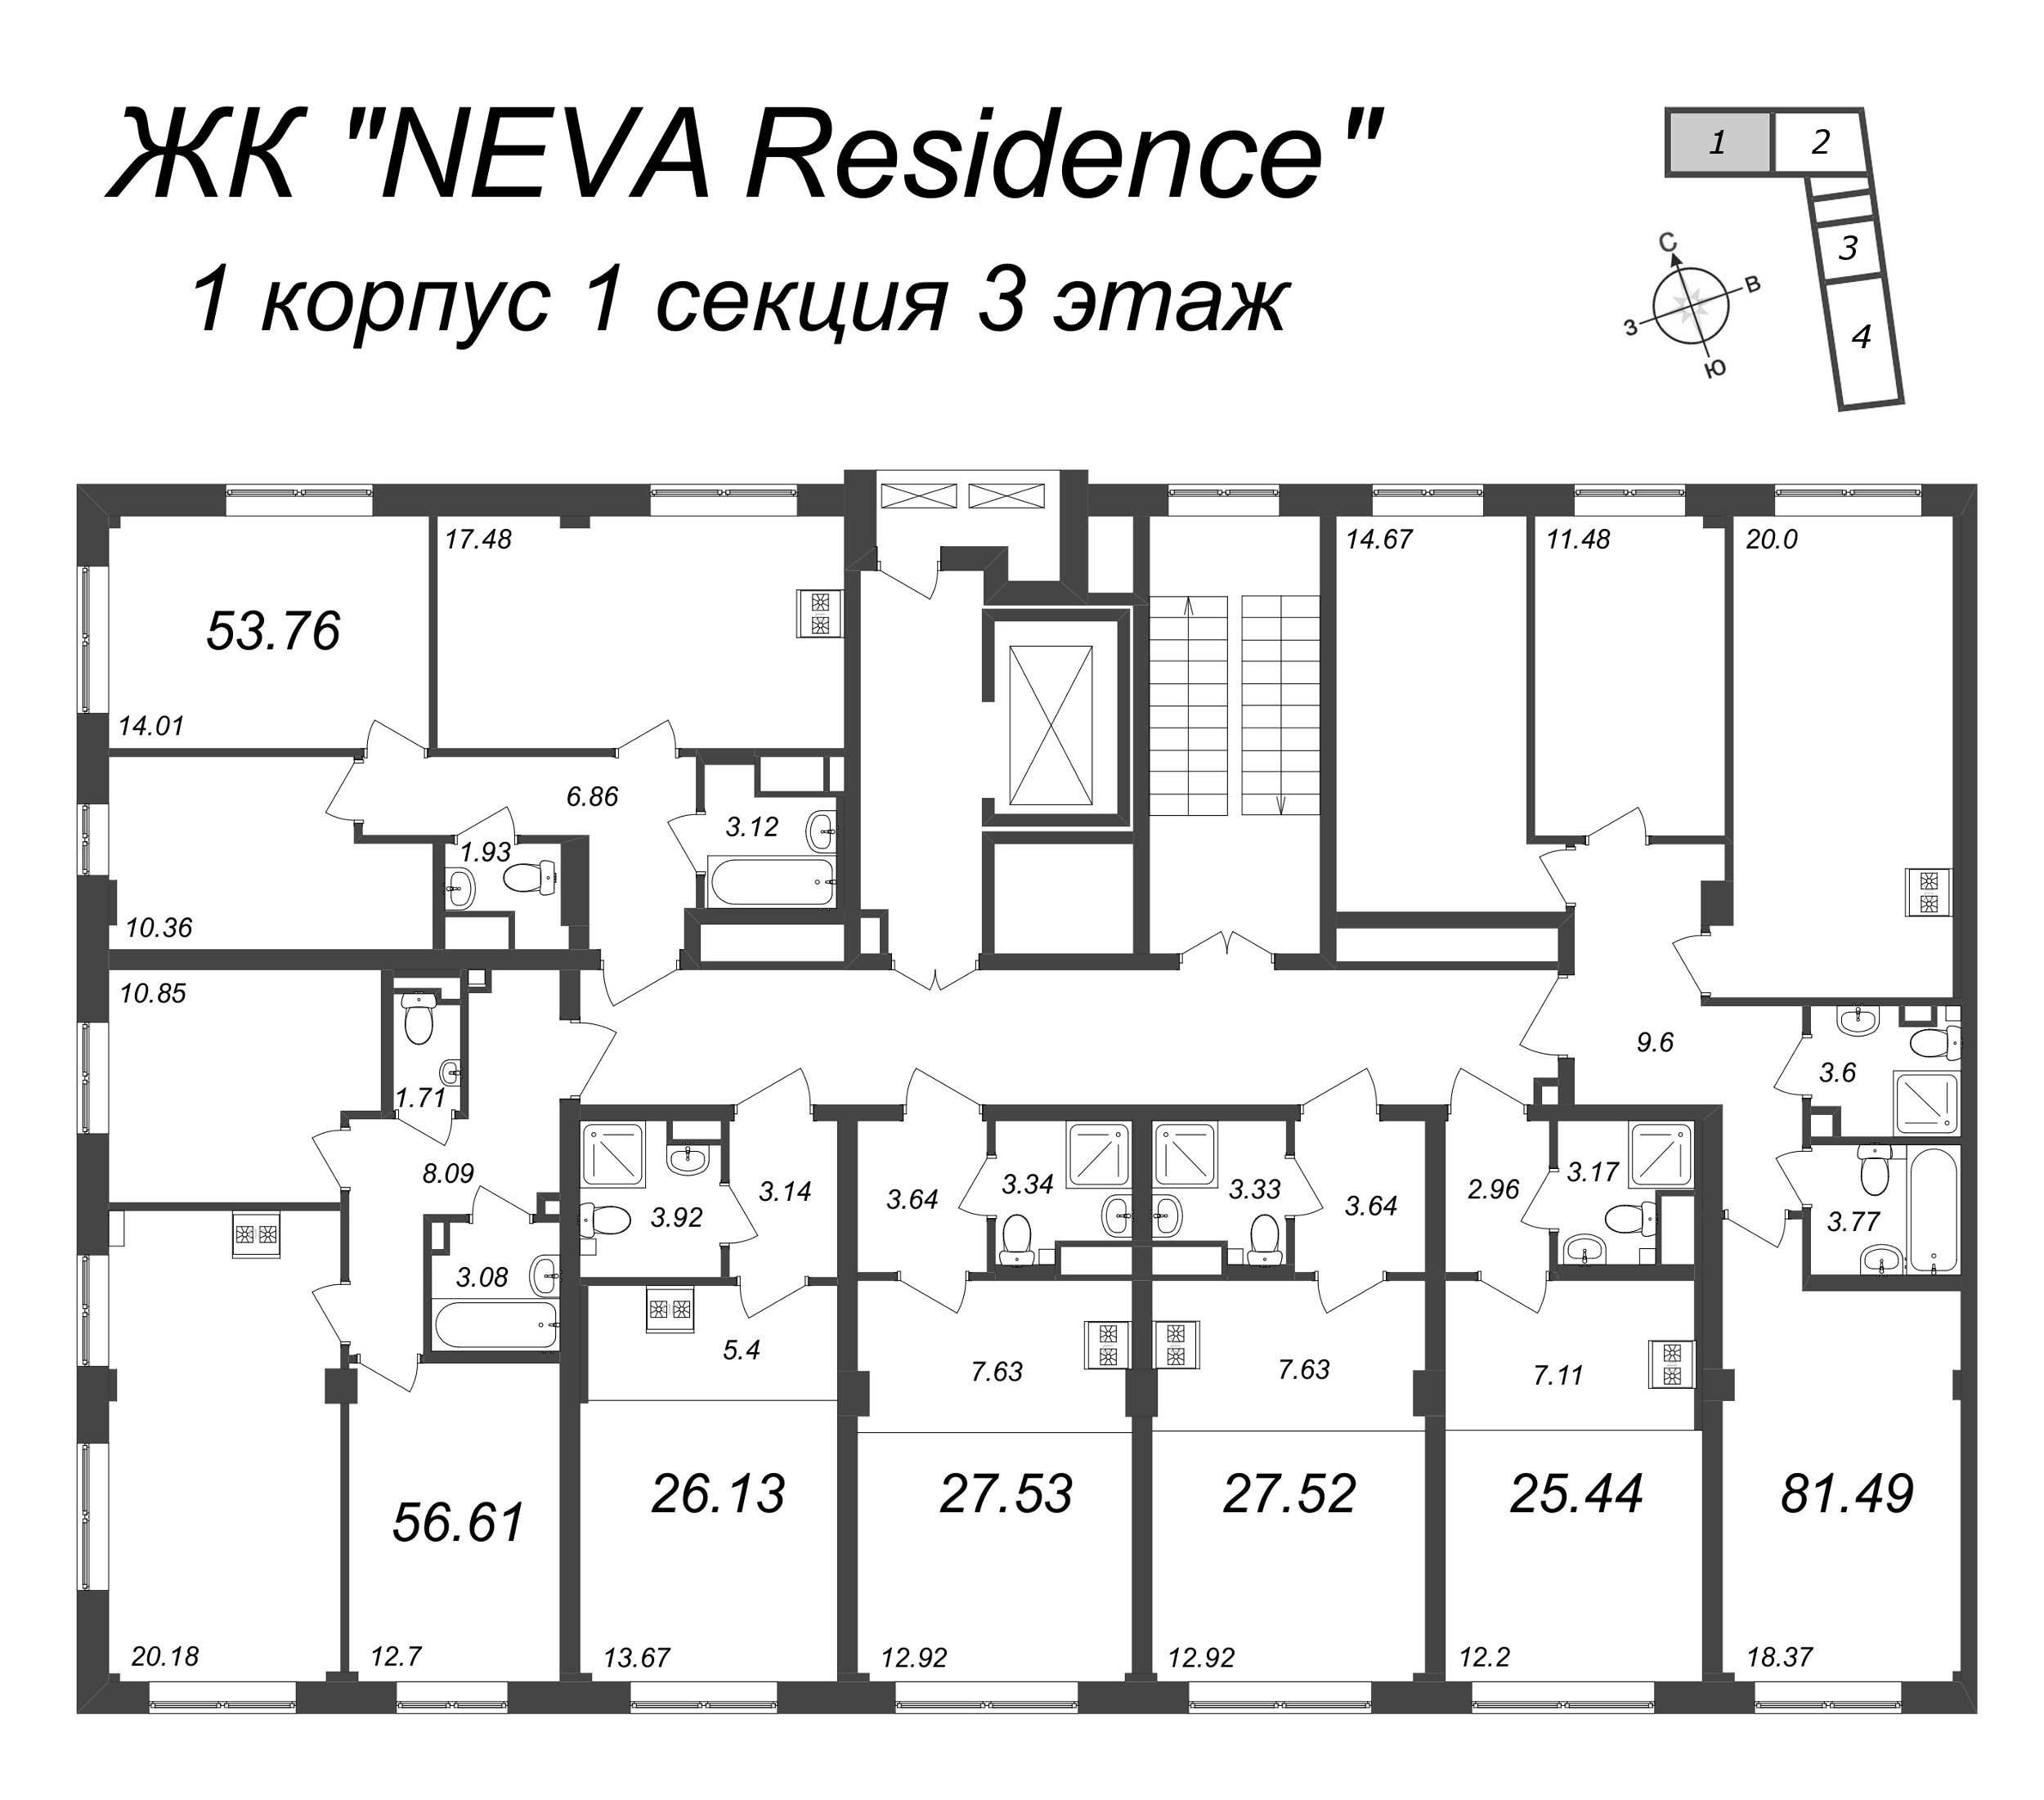 4-комнатная (Евро) квартира, 81.49 м² - планировка этажа